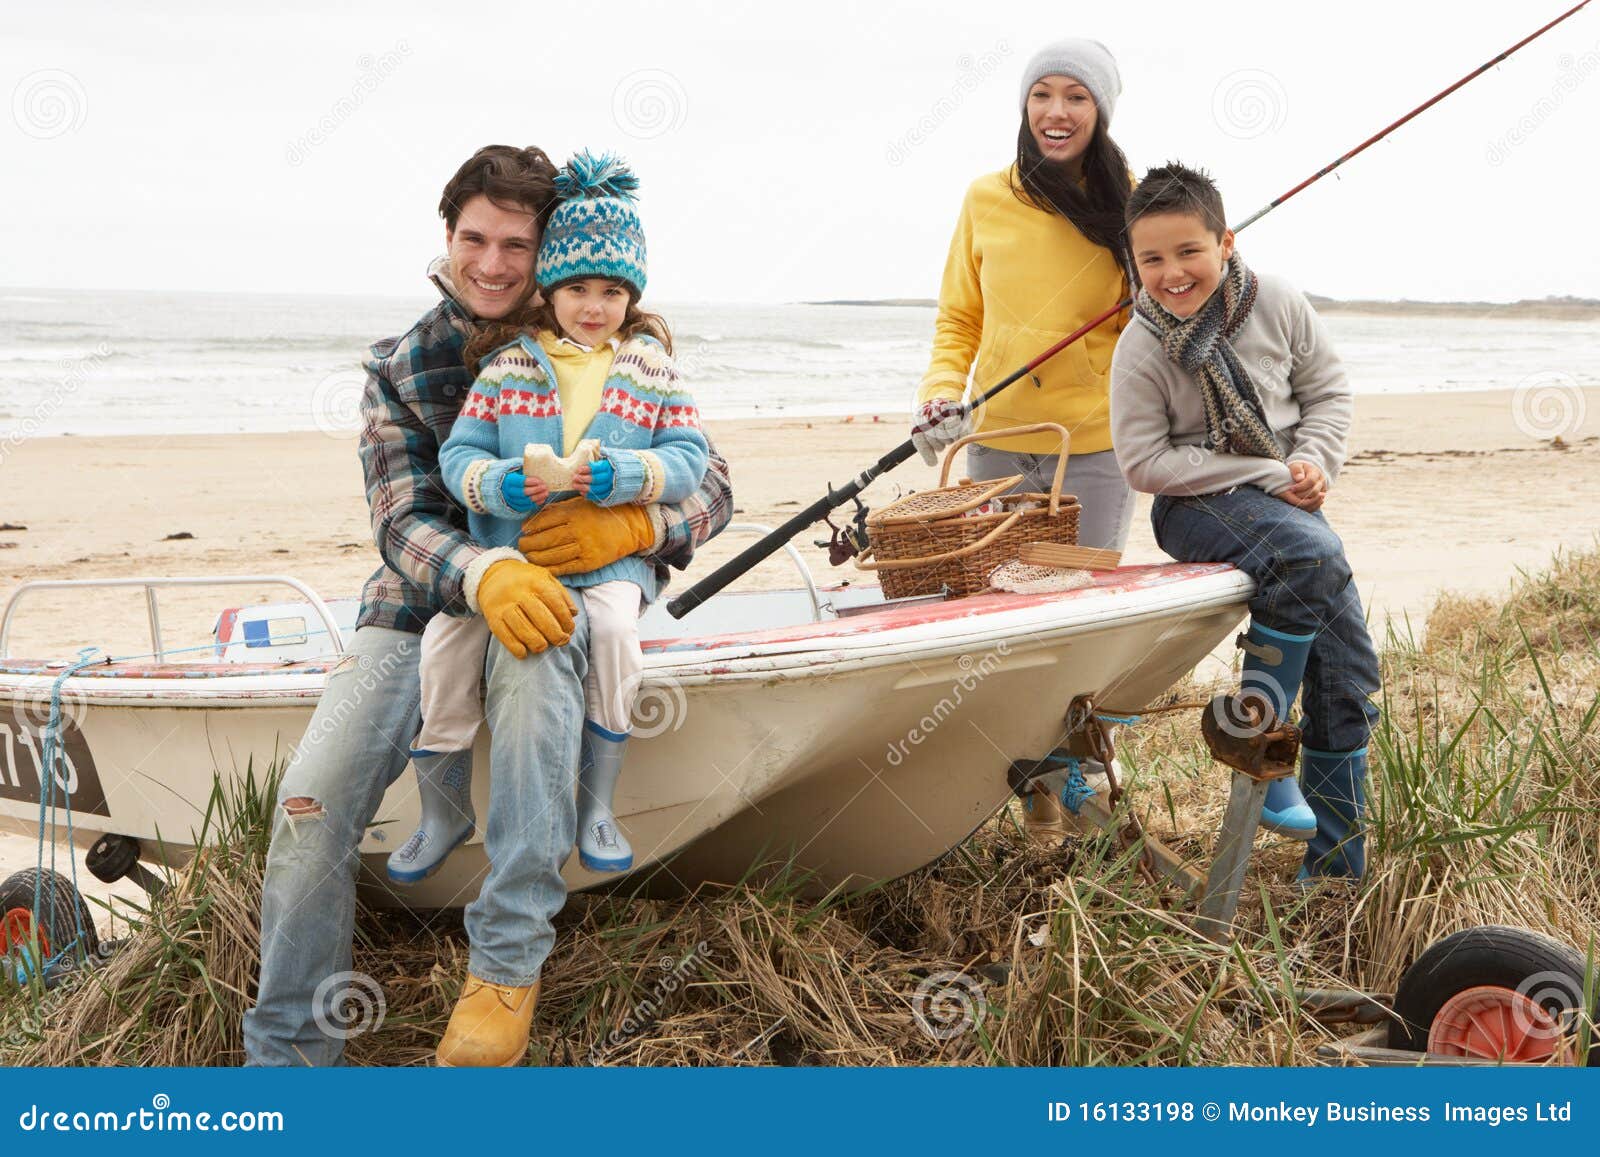 10,469 Beach Fishing Rod Stock Photos - Free & Royalty-Free Stock